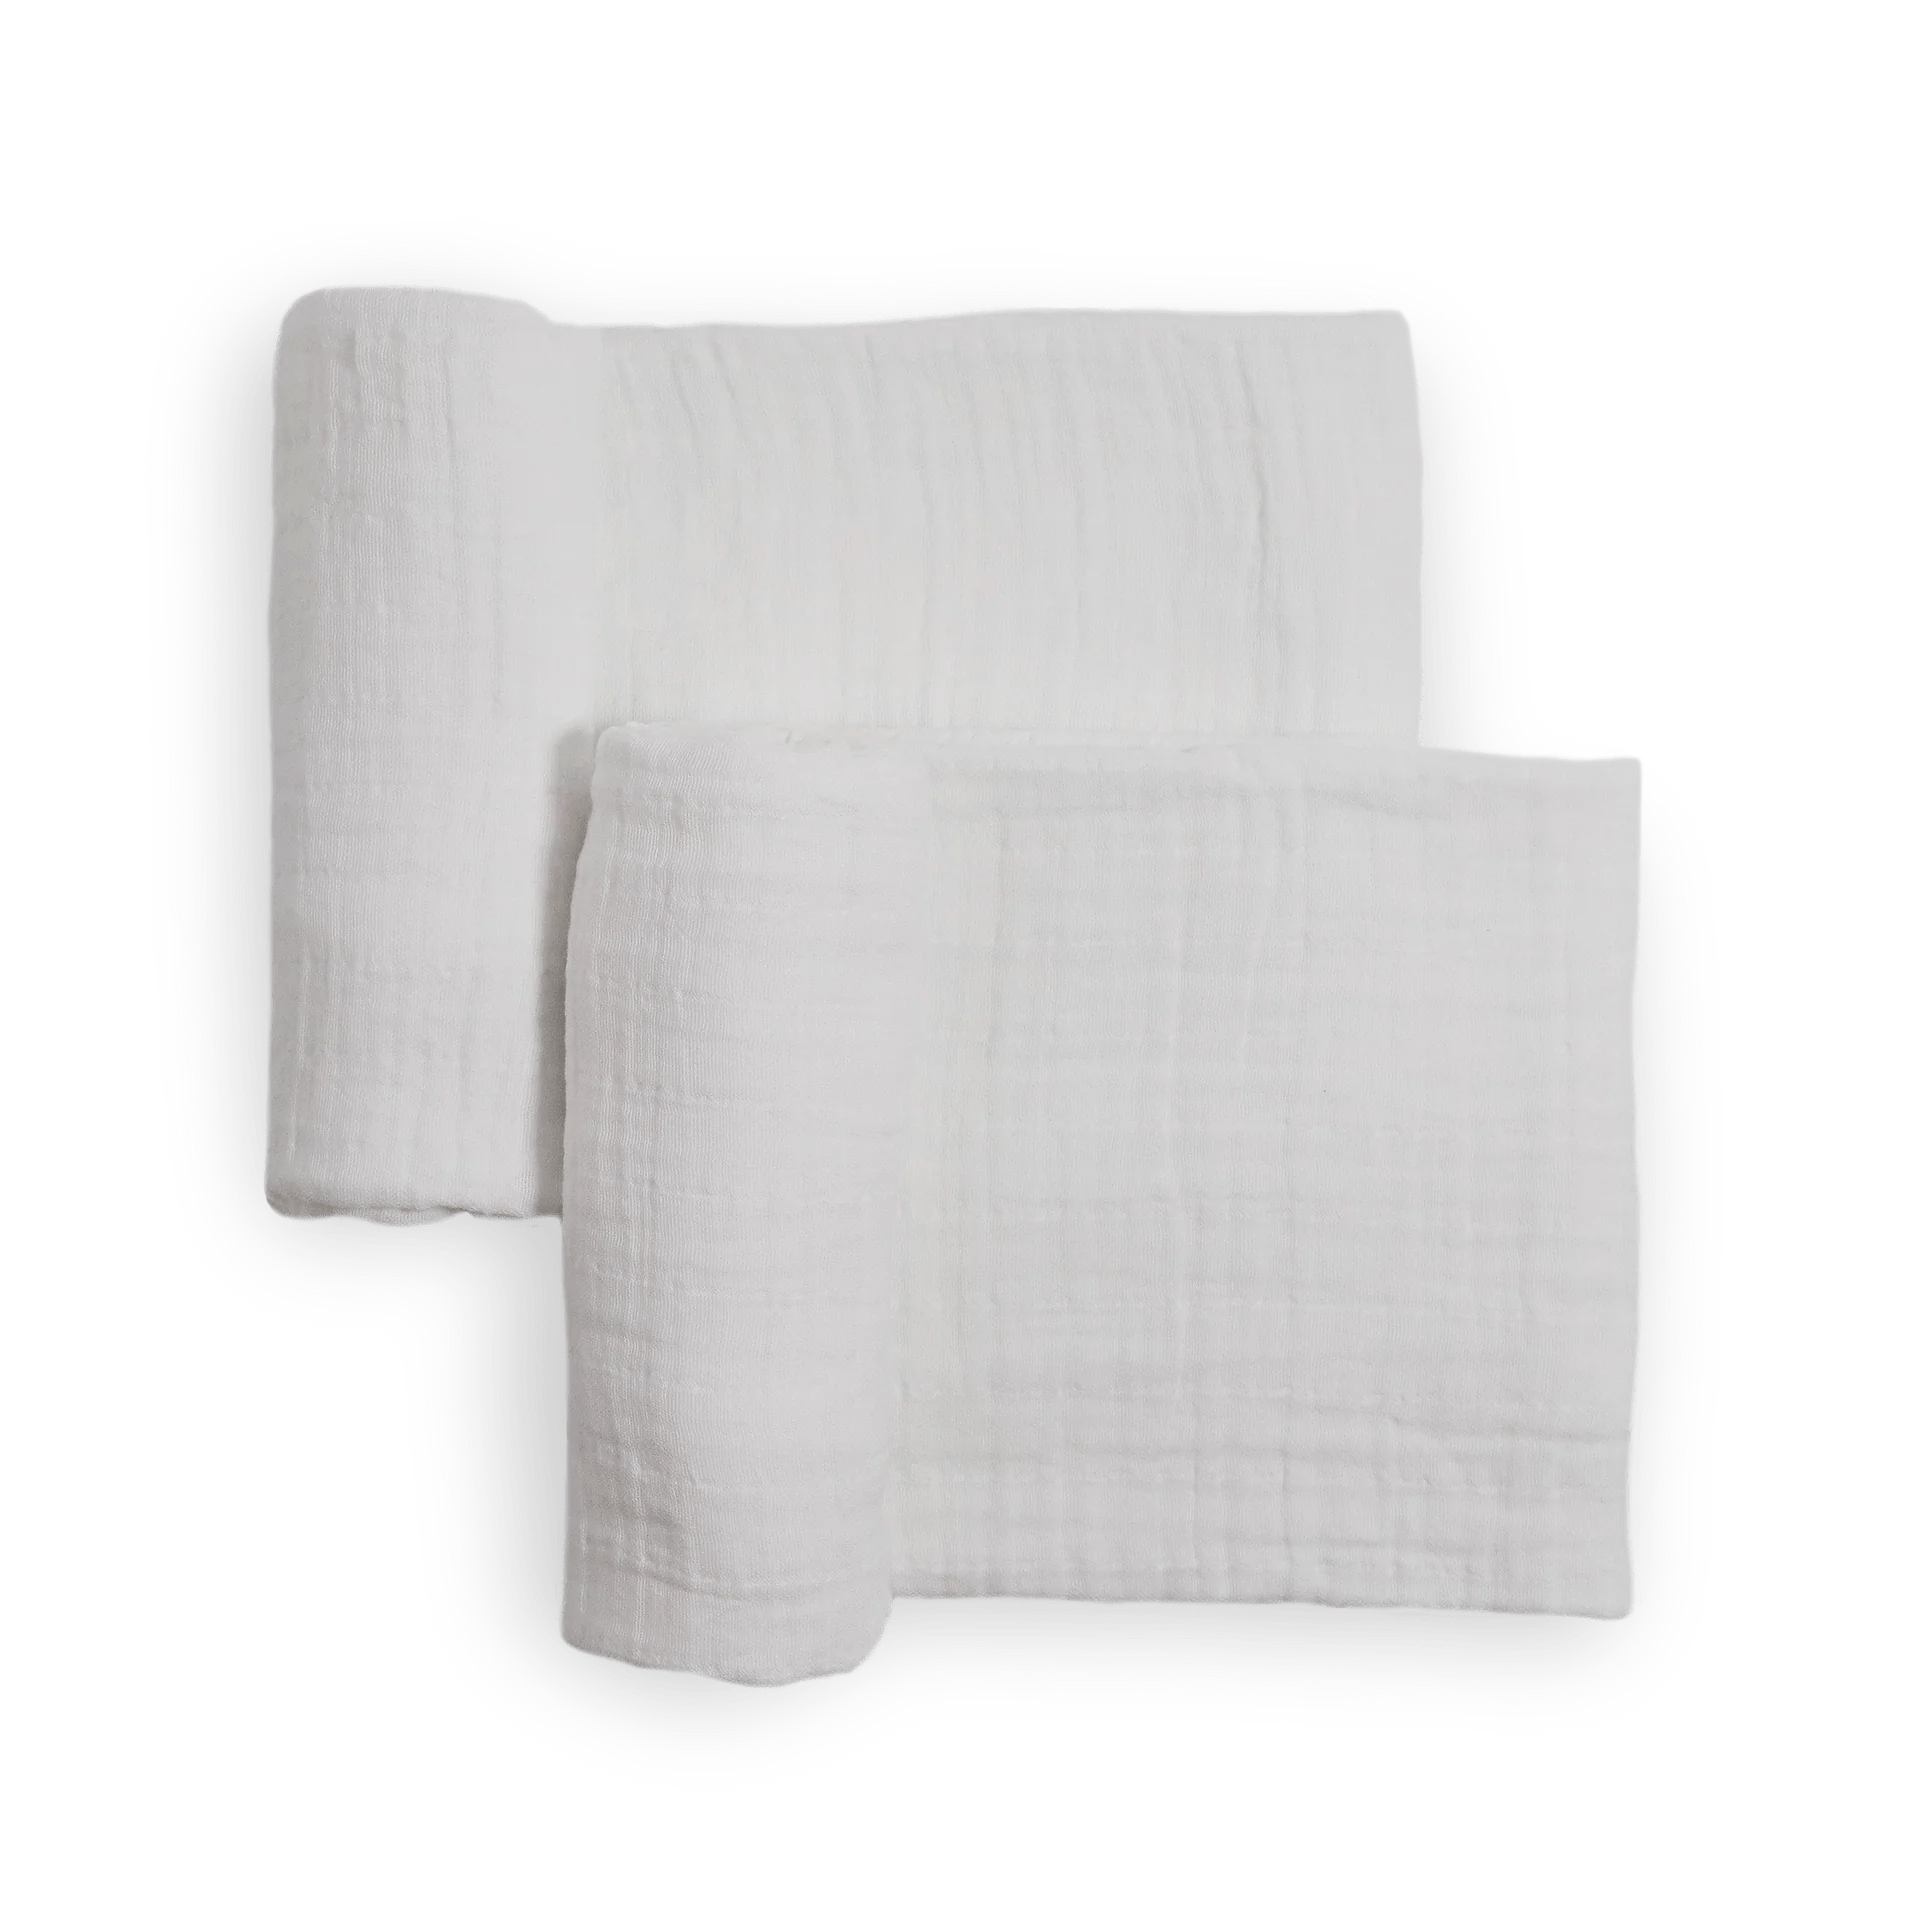 Organic Cotton Muslin Swaddle Blanket 2 Pack - White Little Unicorn Lil Tulips